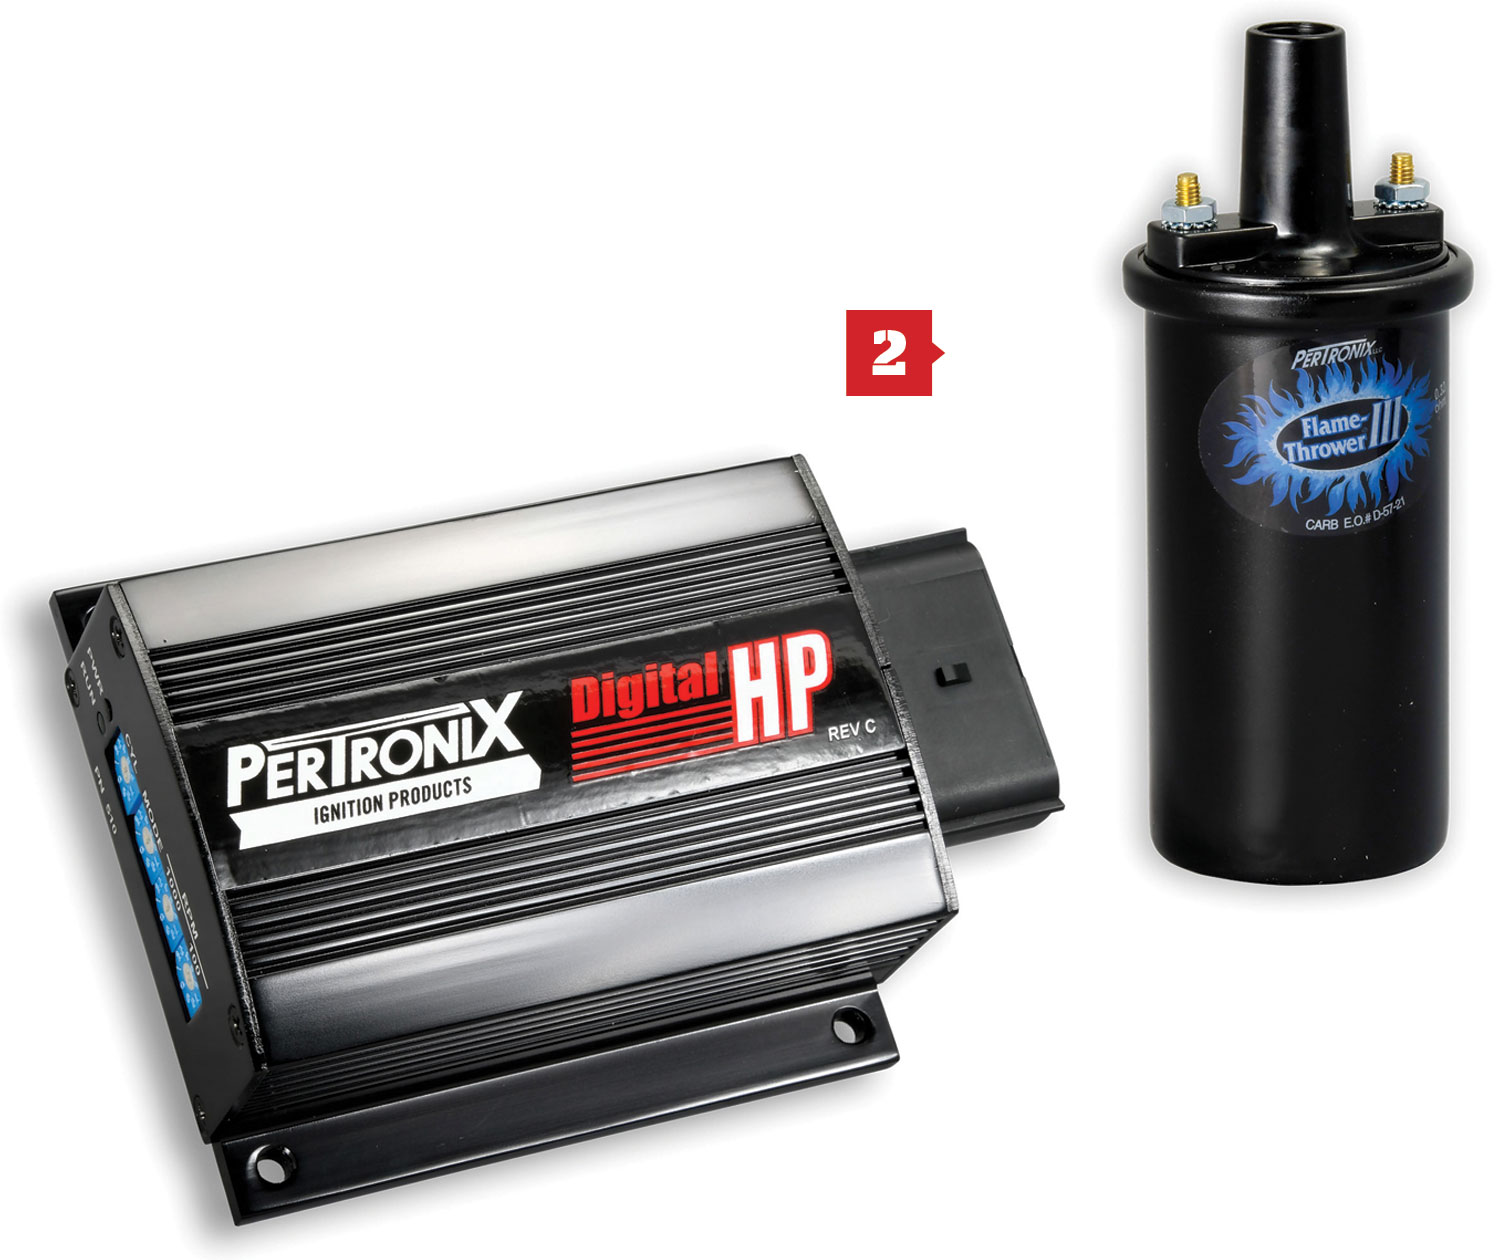 PerTronix’s 510C Digital HP ignition box